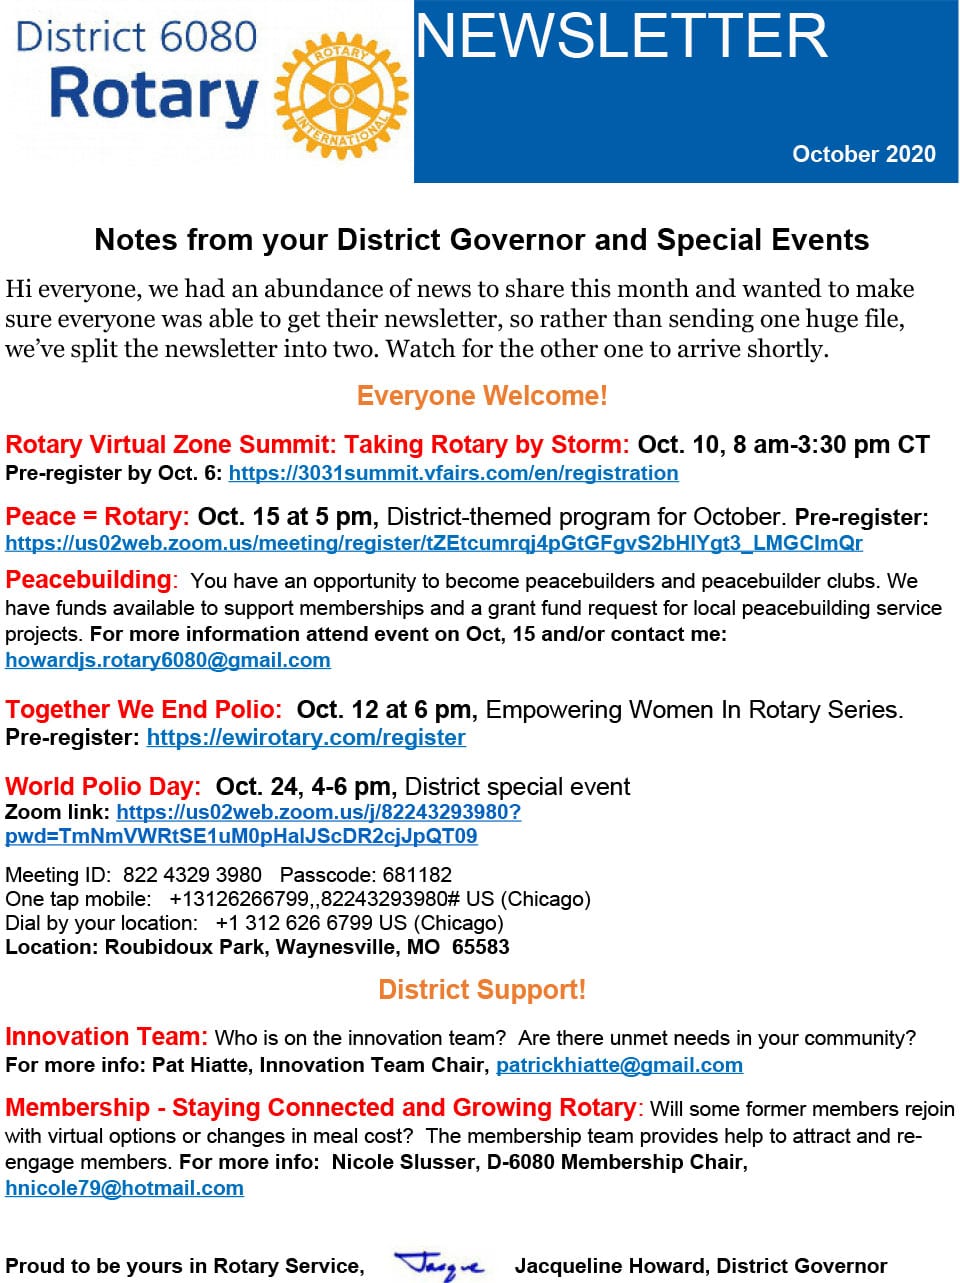 October 2020 District Governor Newsletter